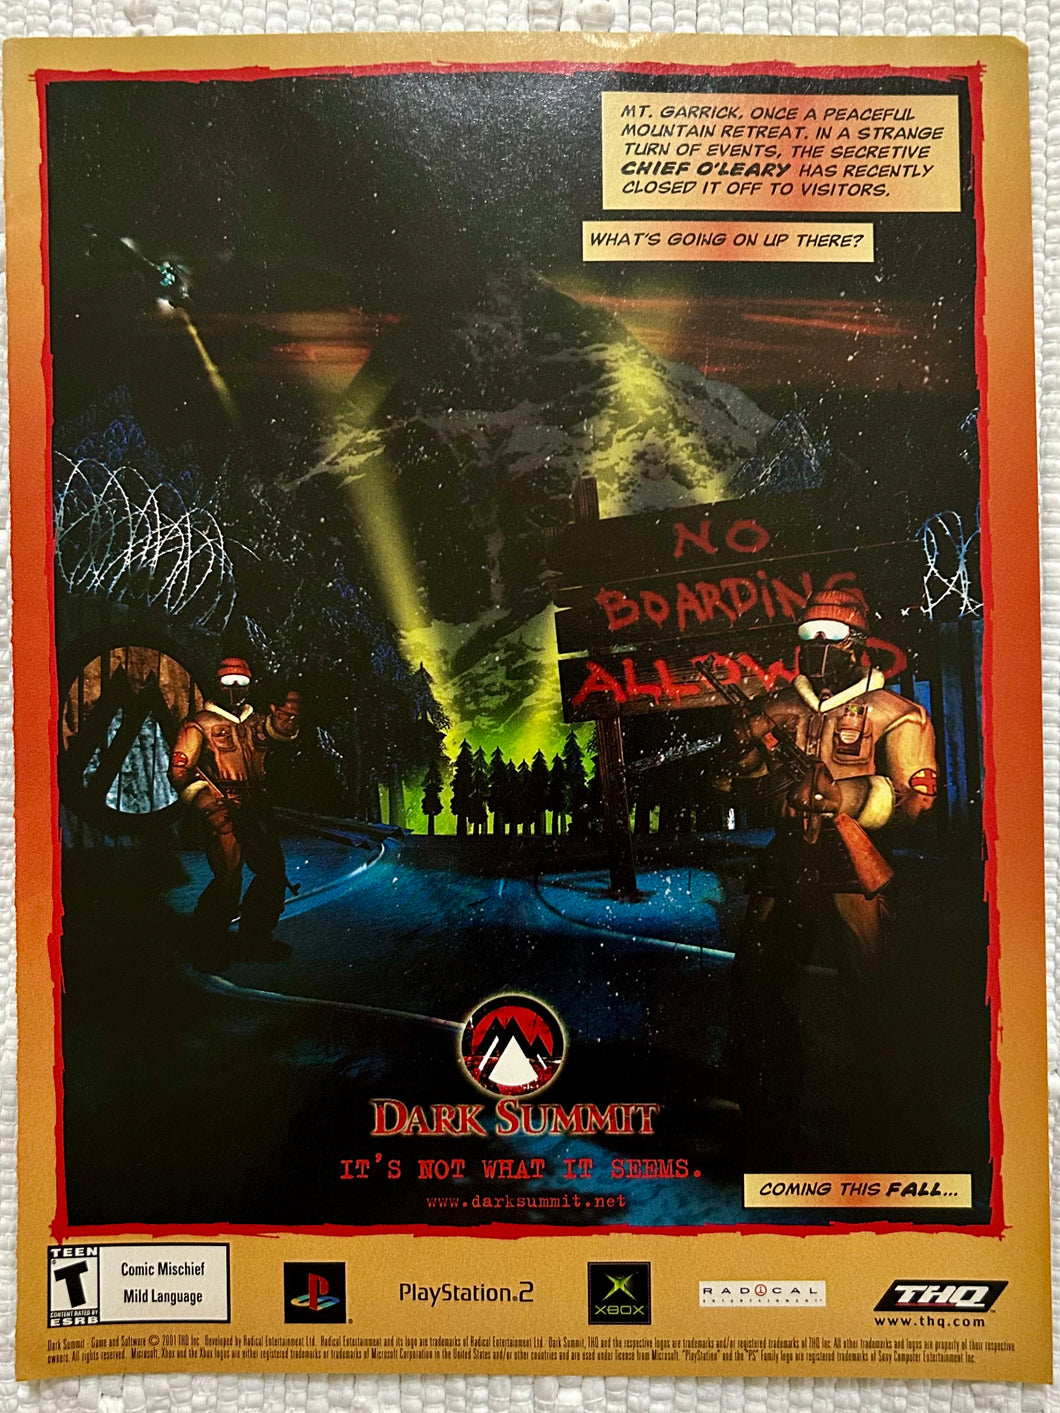 Dark Summit - PS2 Xbox - Original Vintage Advertisement - Print Ads - Laminated A4 Poster